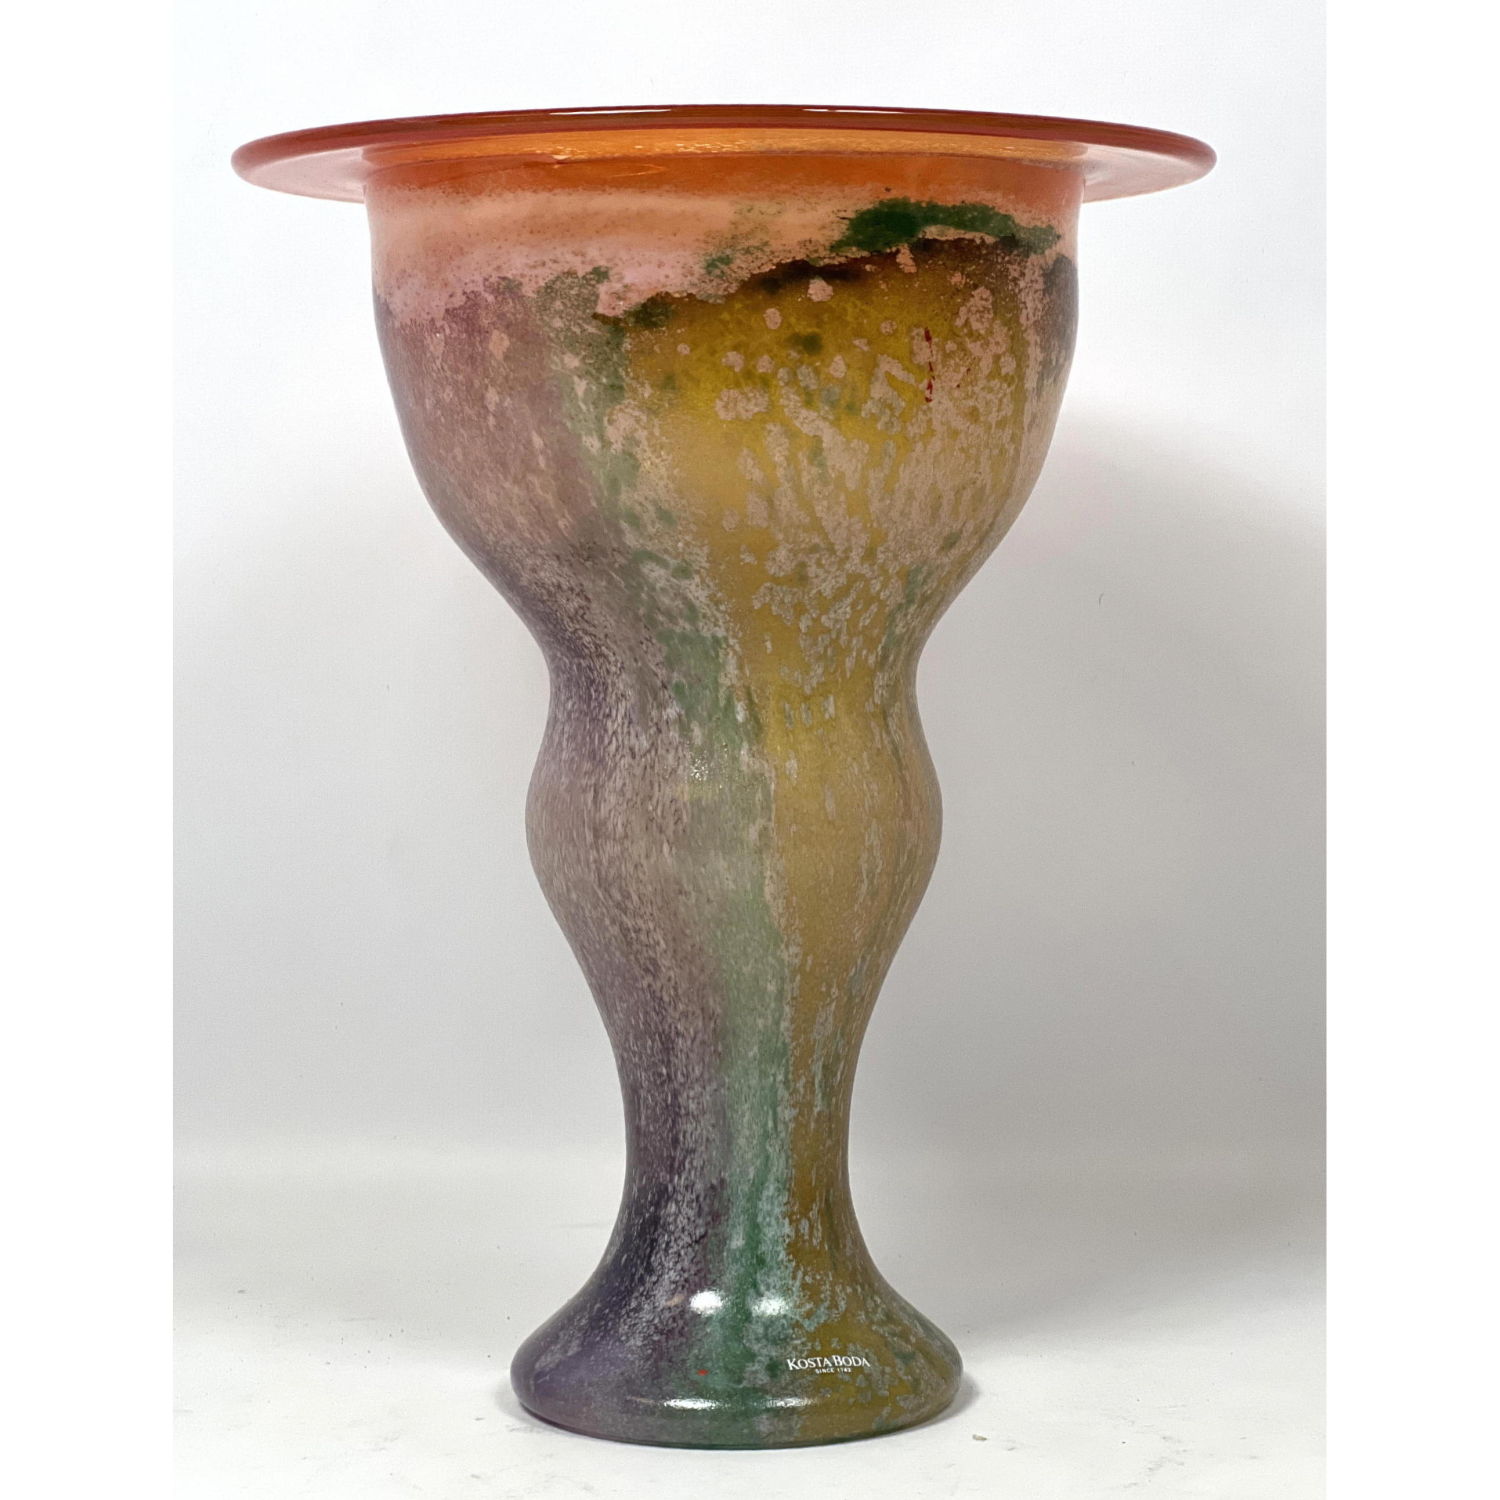 Kosta Boda art glass vase. Orange to